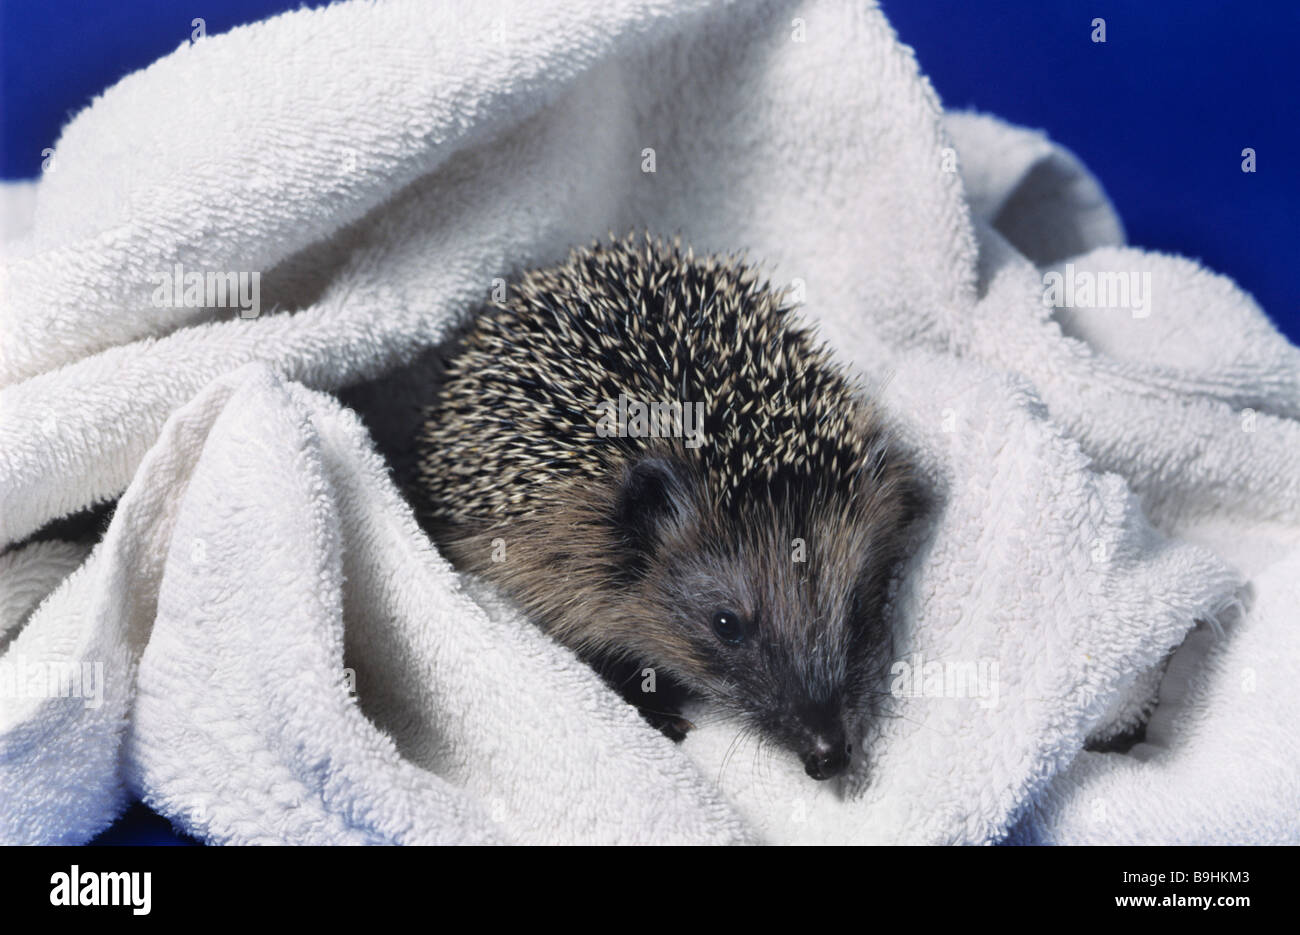 West European Hedgehog (Erinaceus europaeus) on a white towel after bathing Stock Photo